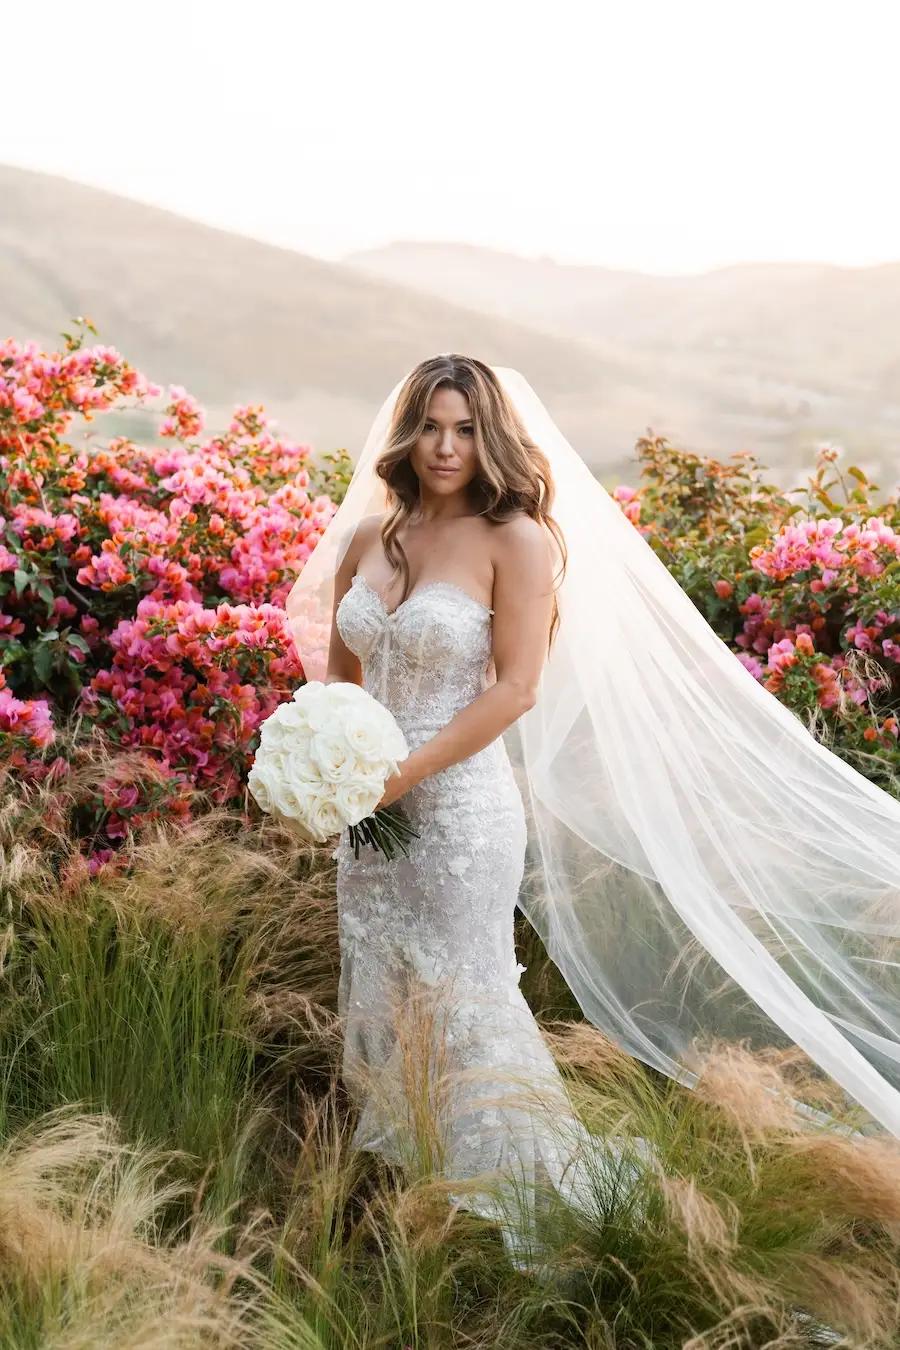 Jolene Wears Sparkle Lace Strapless Wedding Dress. Desktop Image